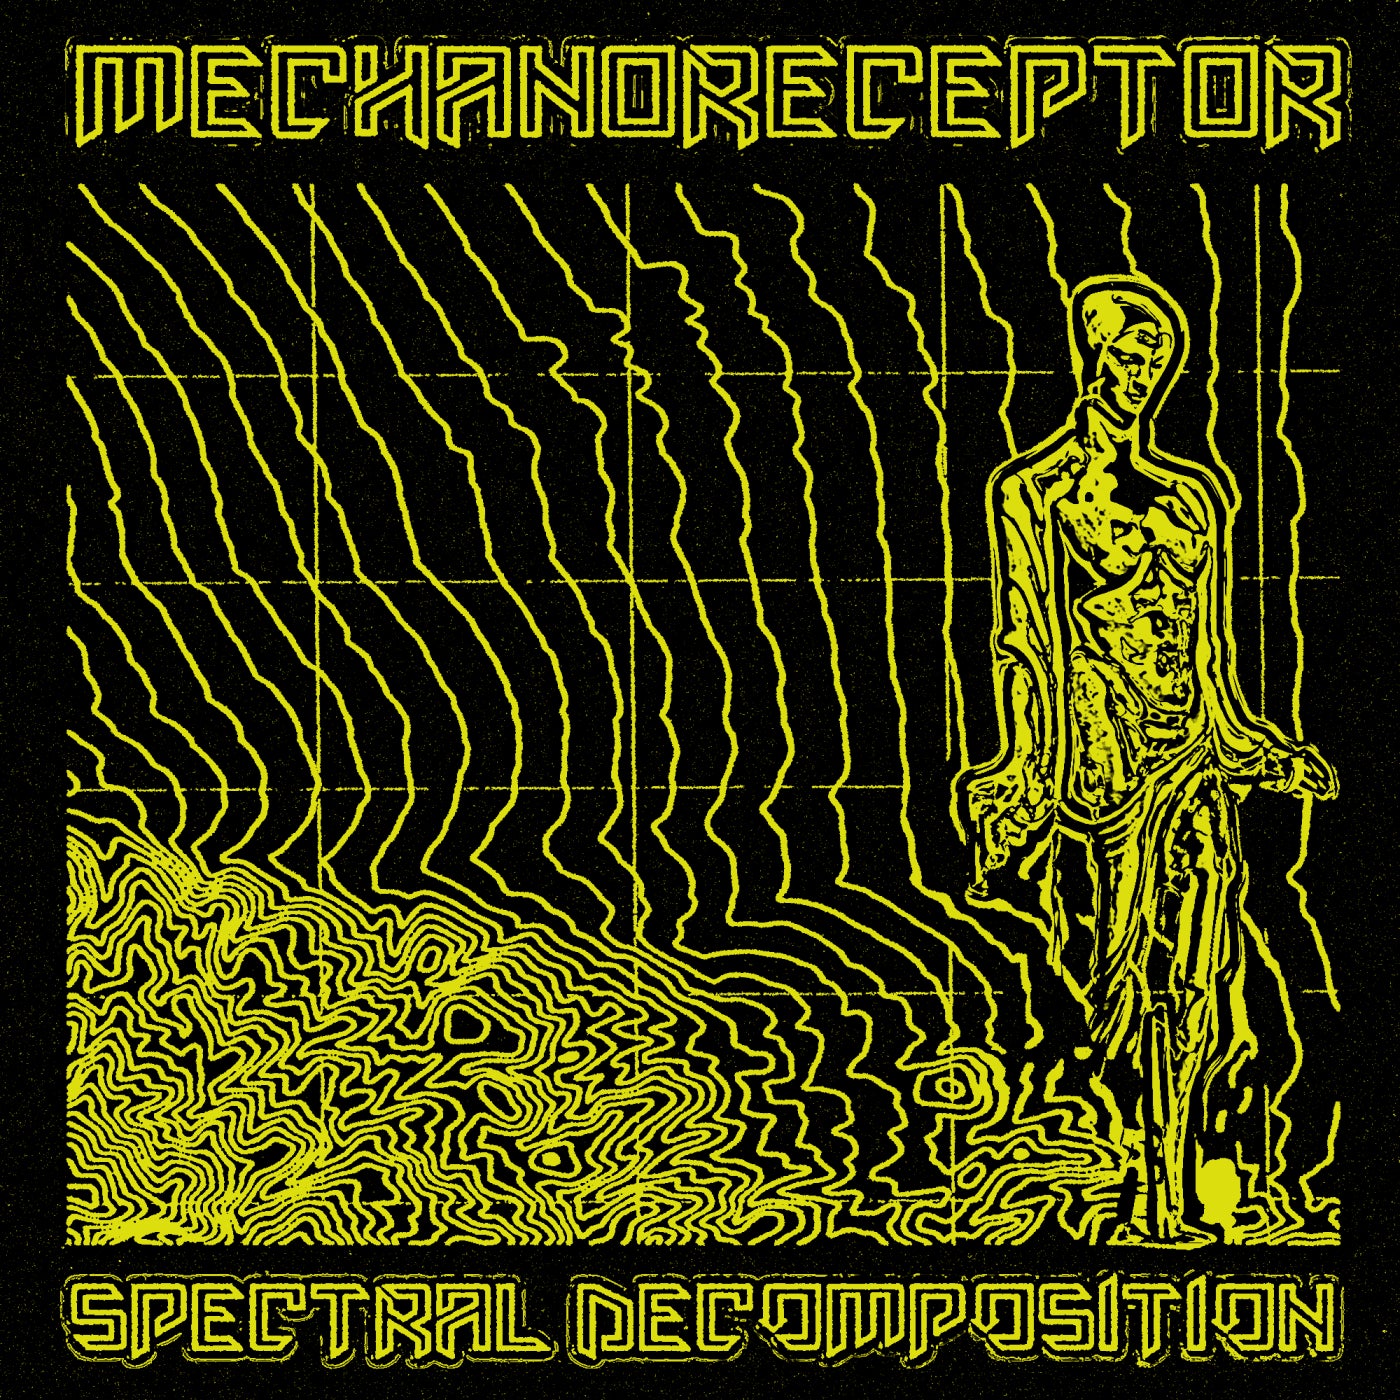 Spectral Decomposition